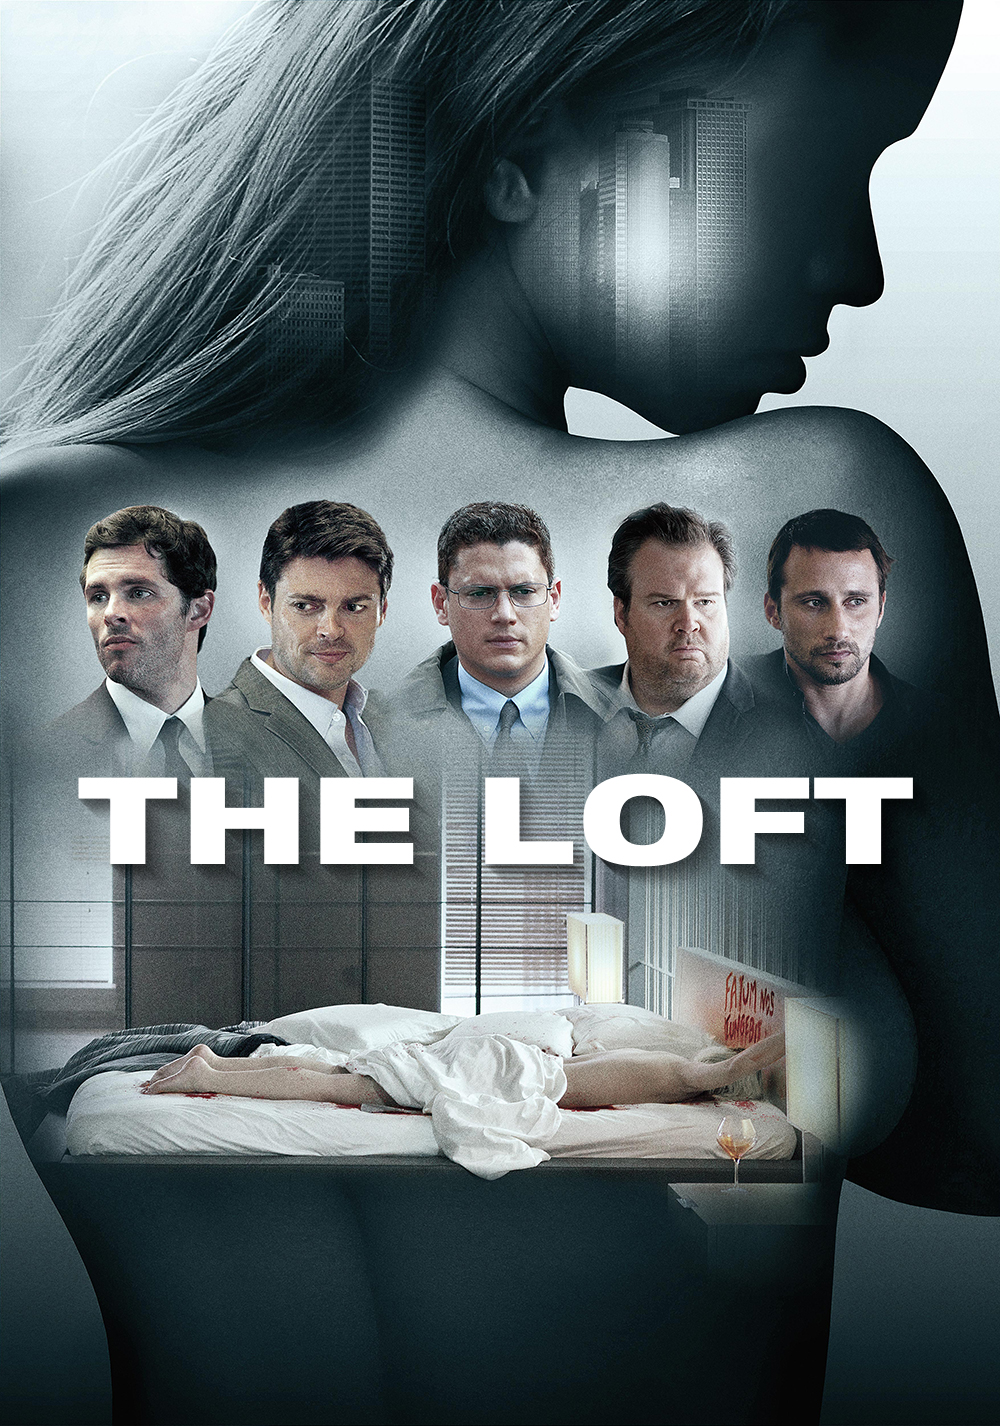 The Loft - Ispita (2014)